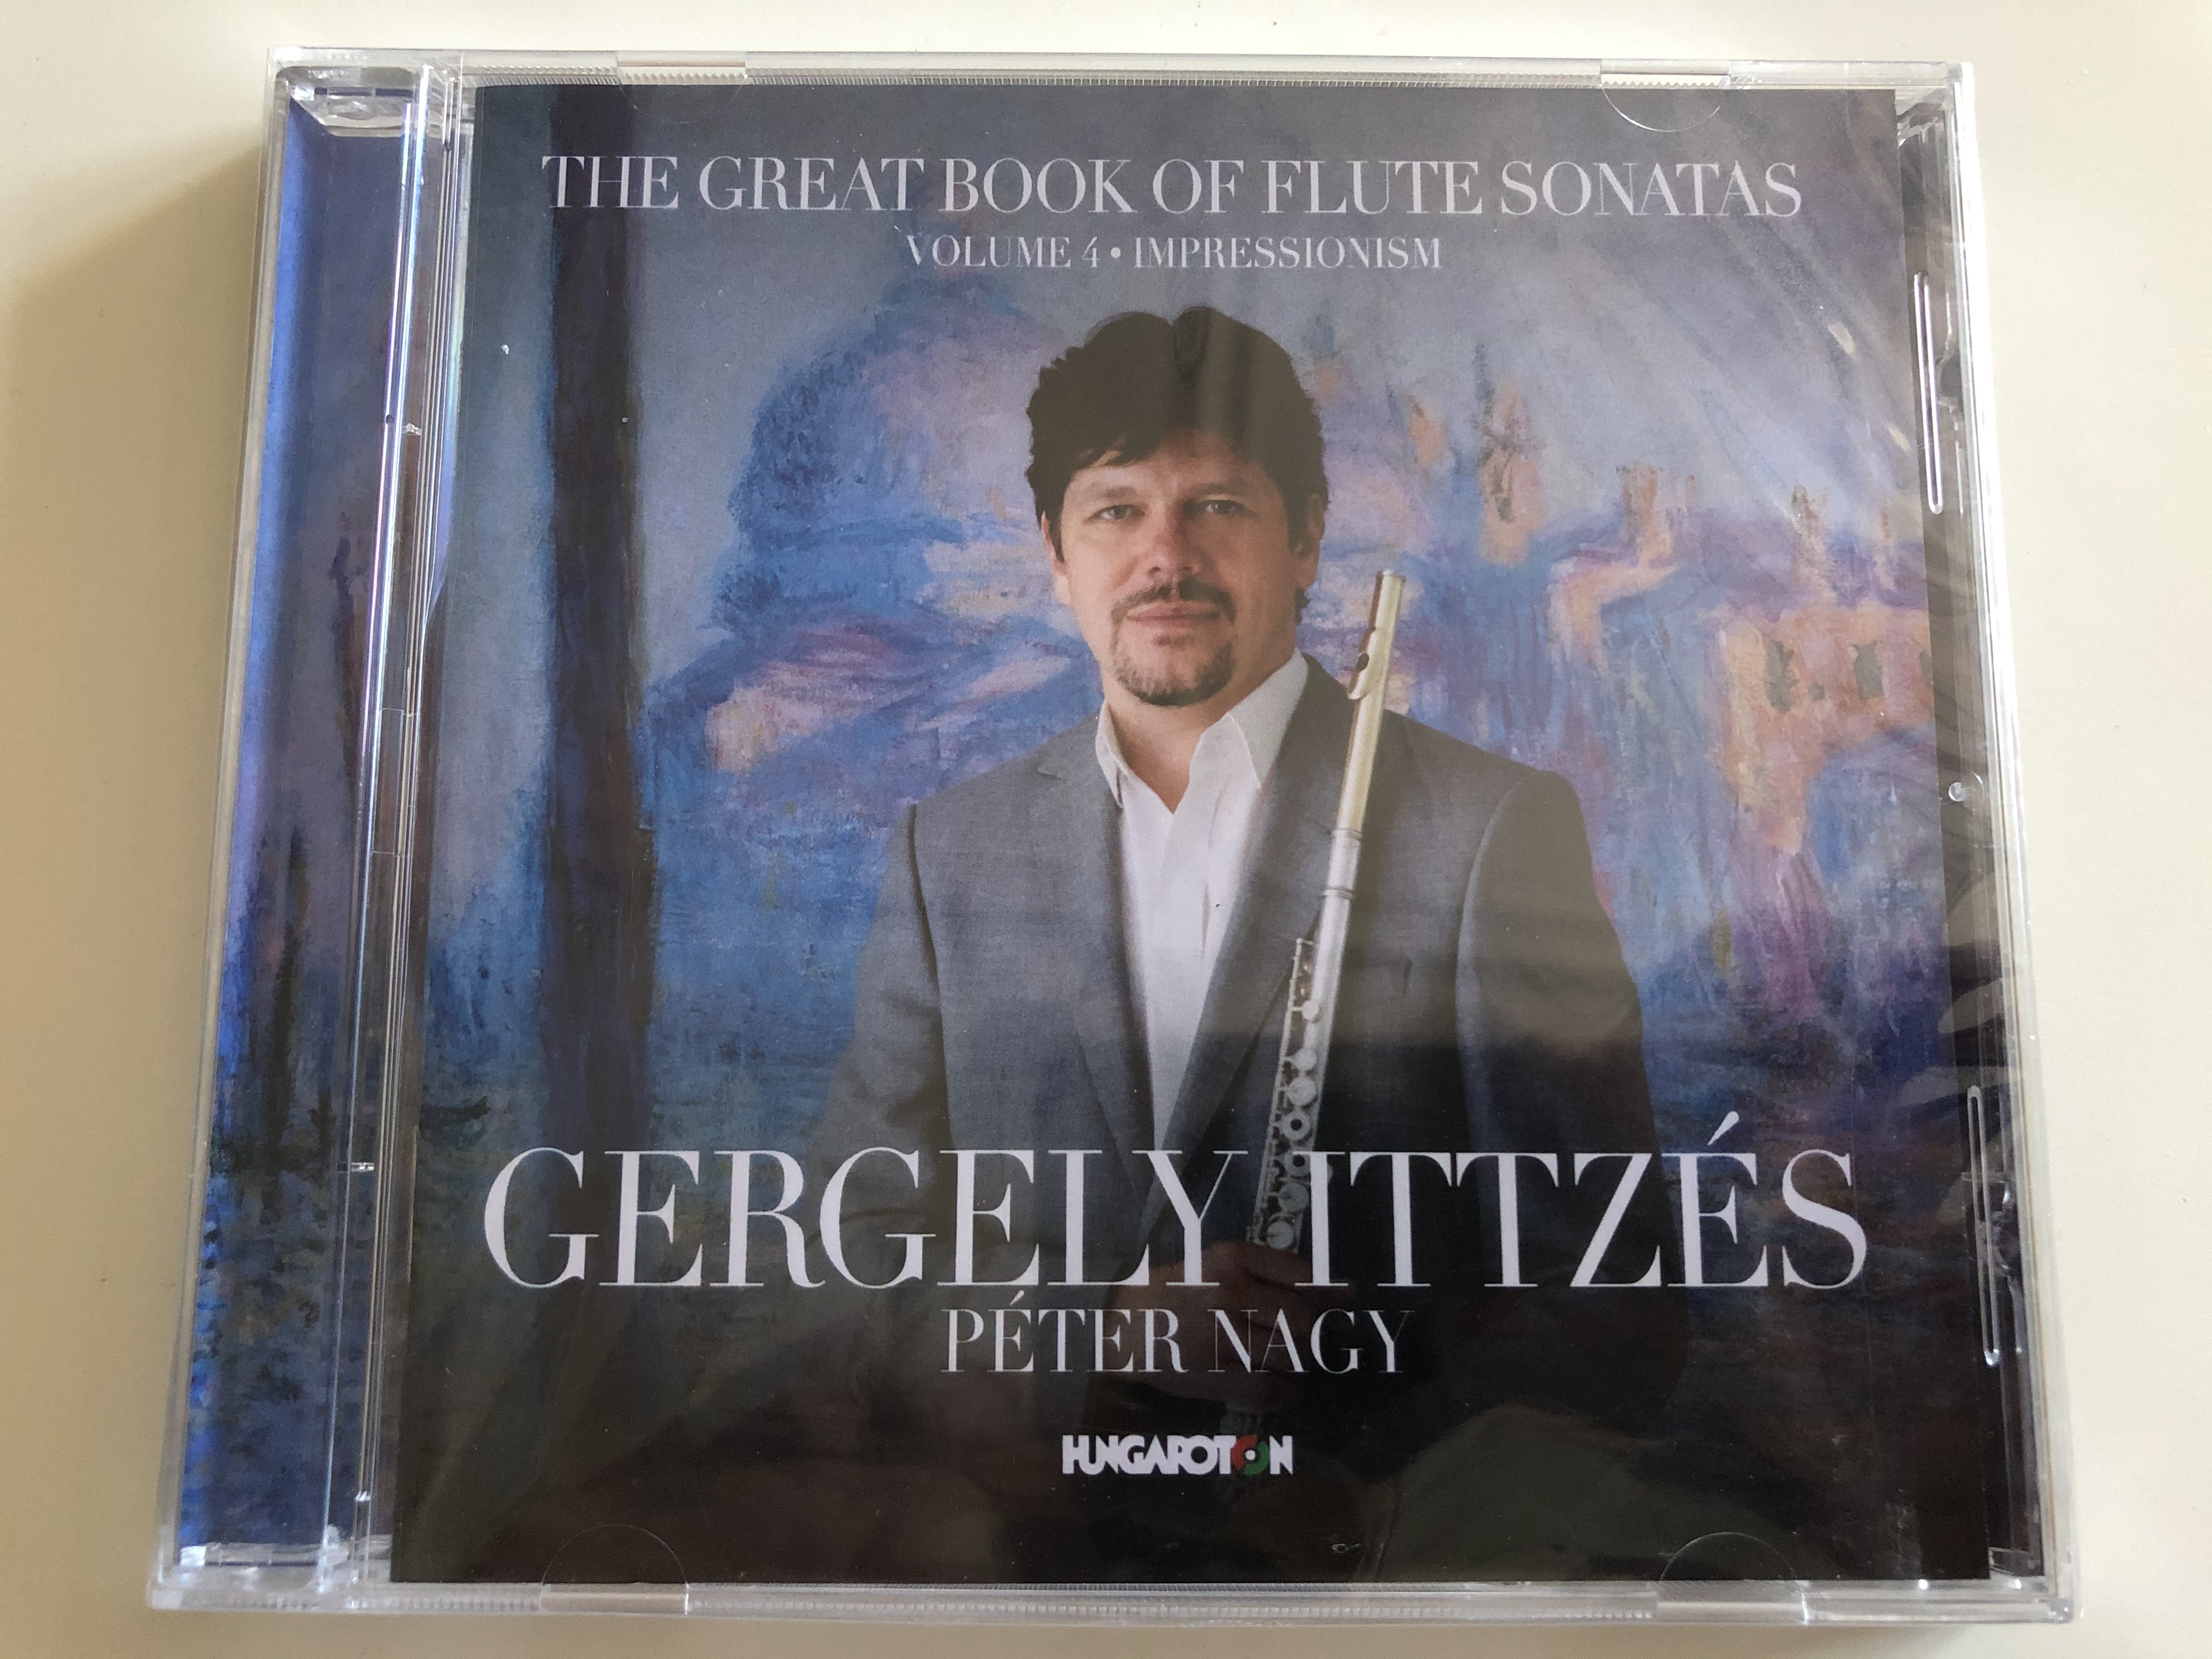 the-great-book-of-flute-sonatas-volume-4-impressionism-gergely-ittz-s-p-ter-nagy-hungaroton-audio-cd-2017-hcd-32776-1-.jpg